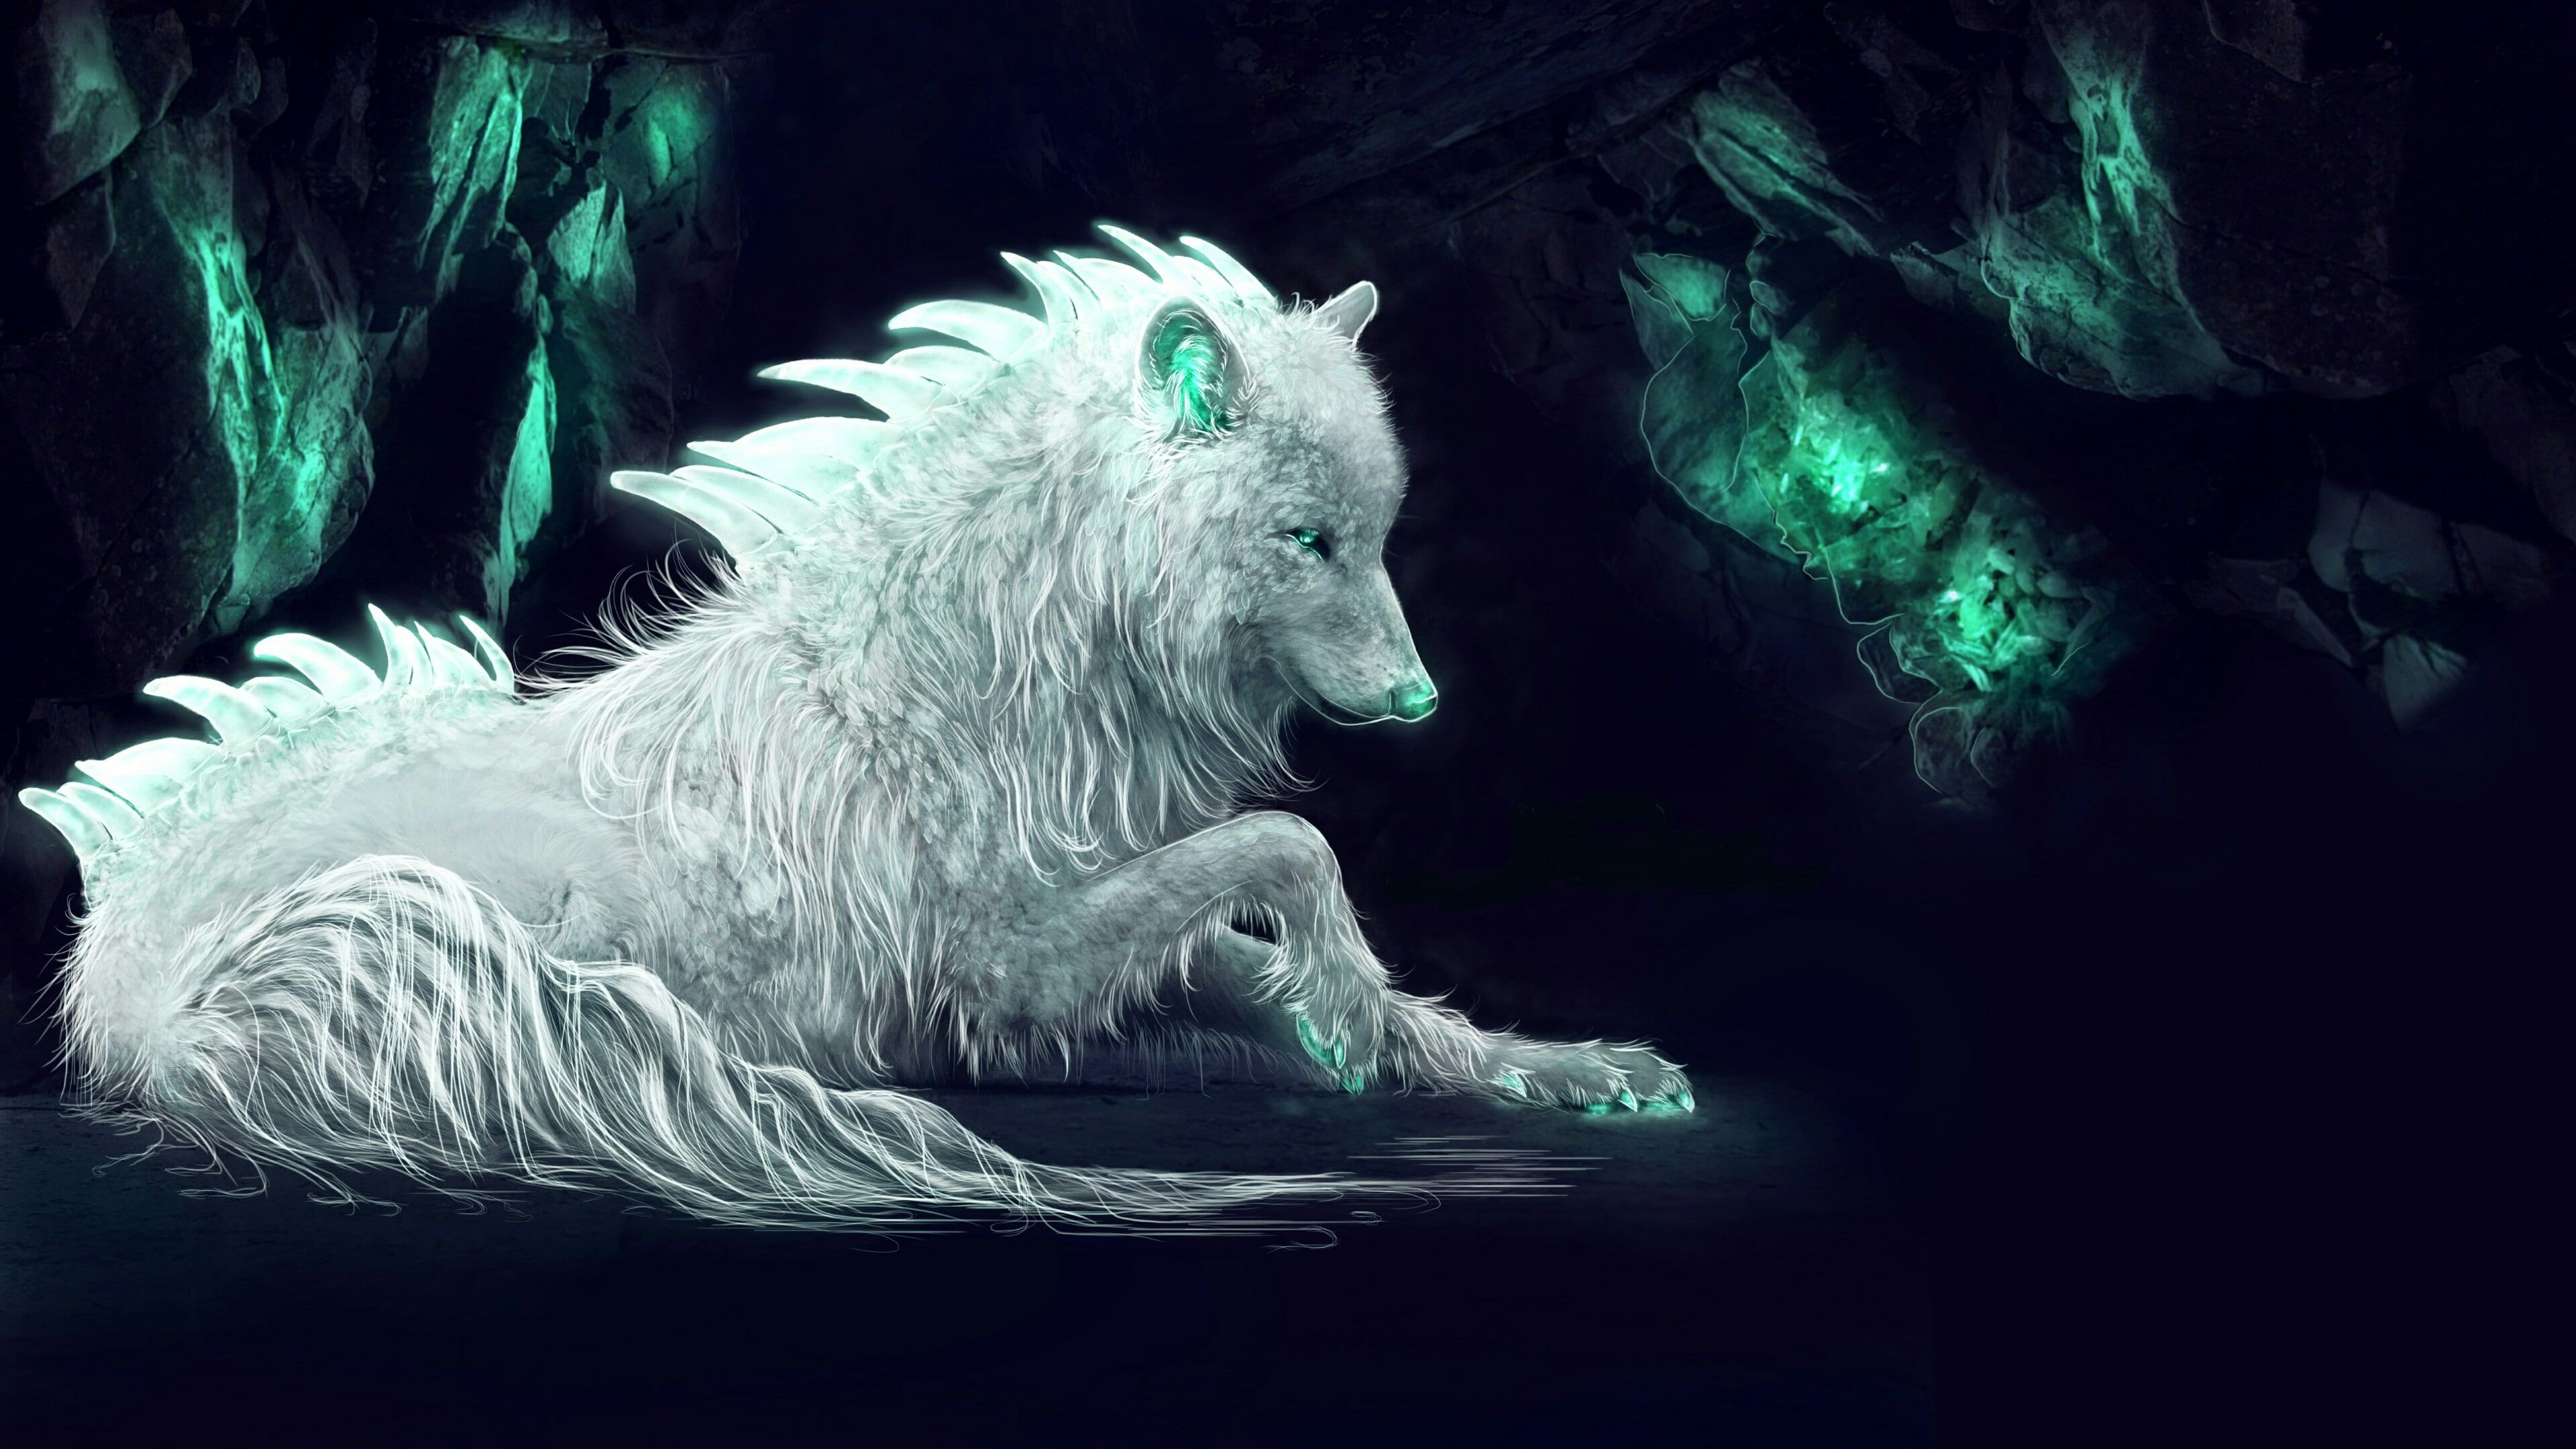 3840x2160 darkness #wolf white wolf fantasy art #imagination mythical creature #4K # wallpaper #hdwallpaper #deskto&acirc;&#128;&brvbar; | Papel de parede de lobo, Criaturas m&Atilde;&shy;ticas, Lobo &Atilde;&iexcl;rtic